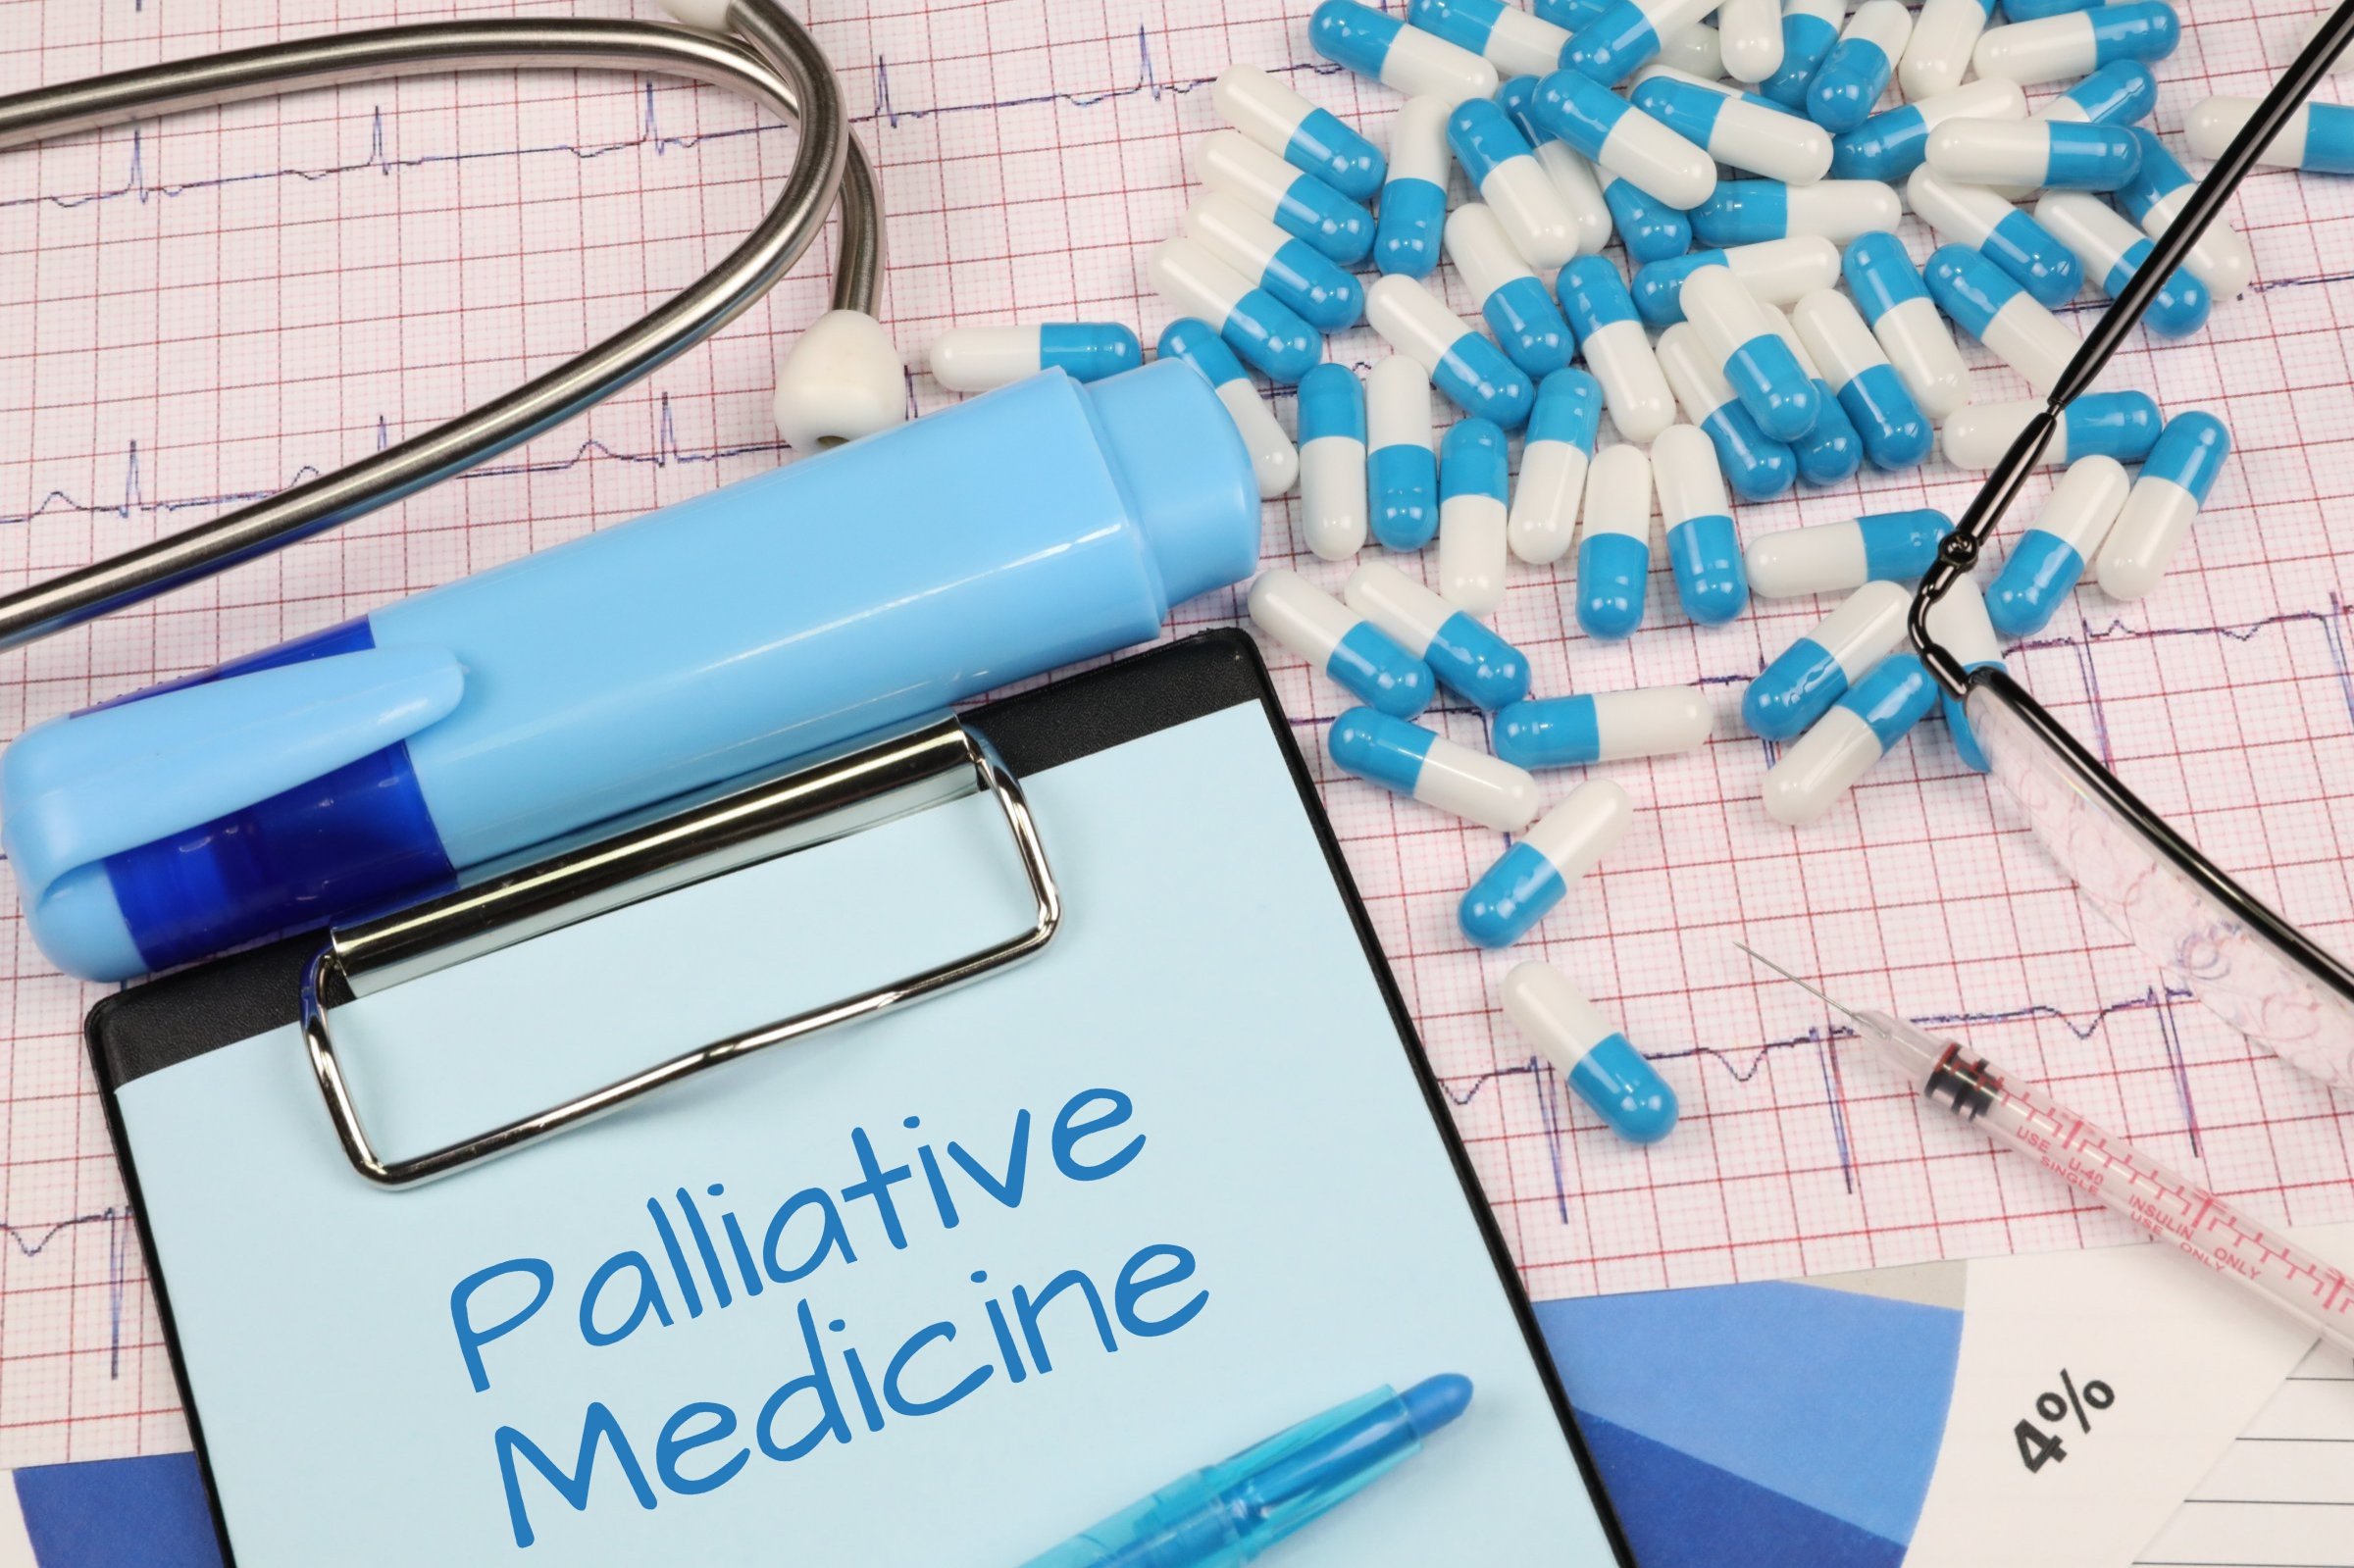 palliative medicine